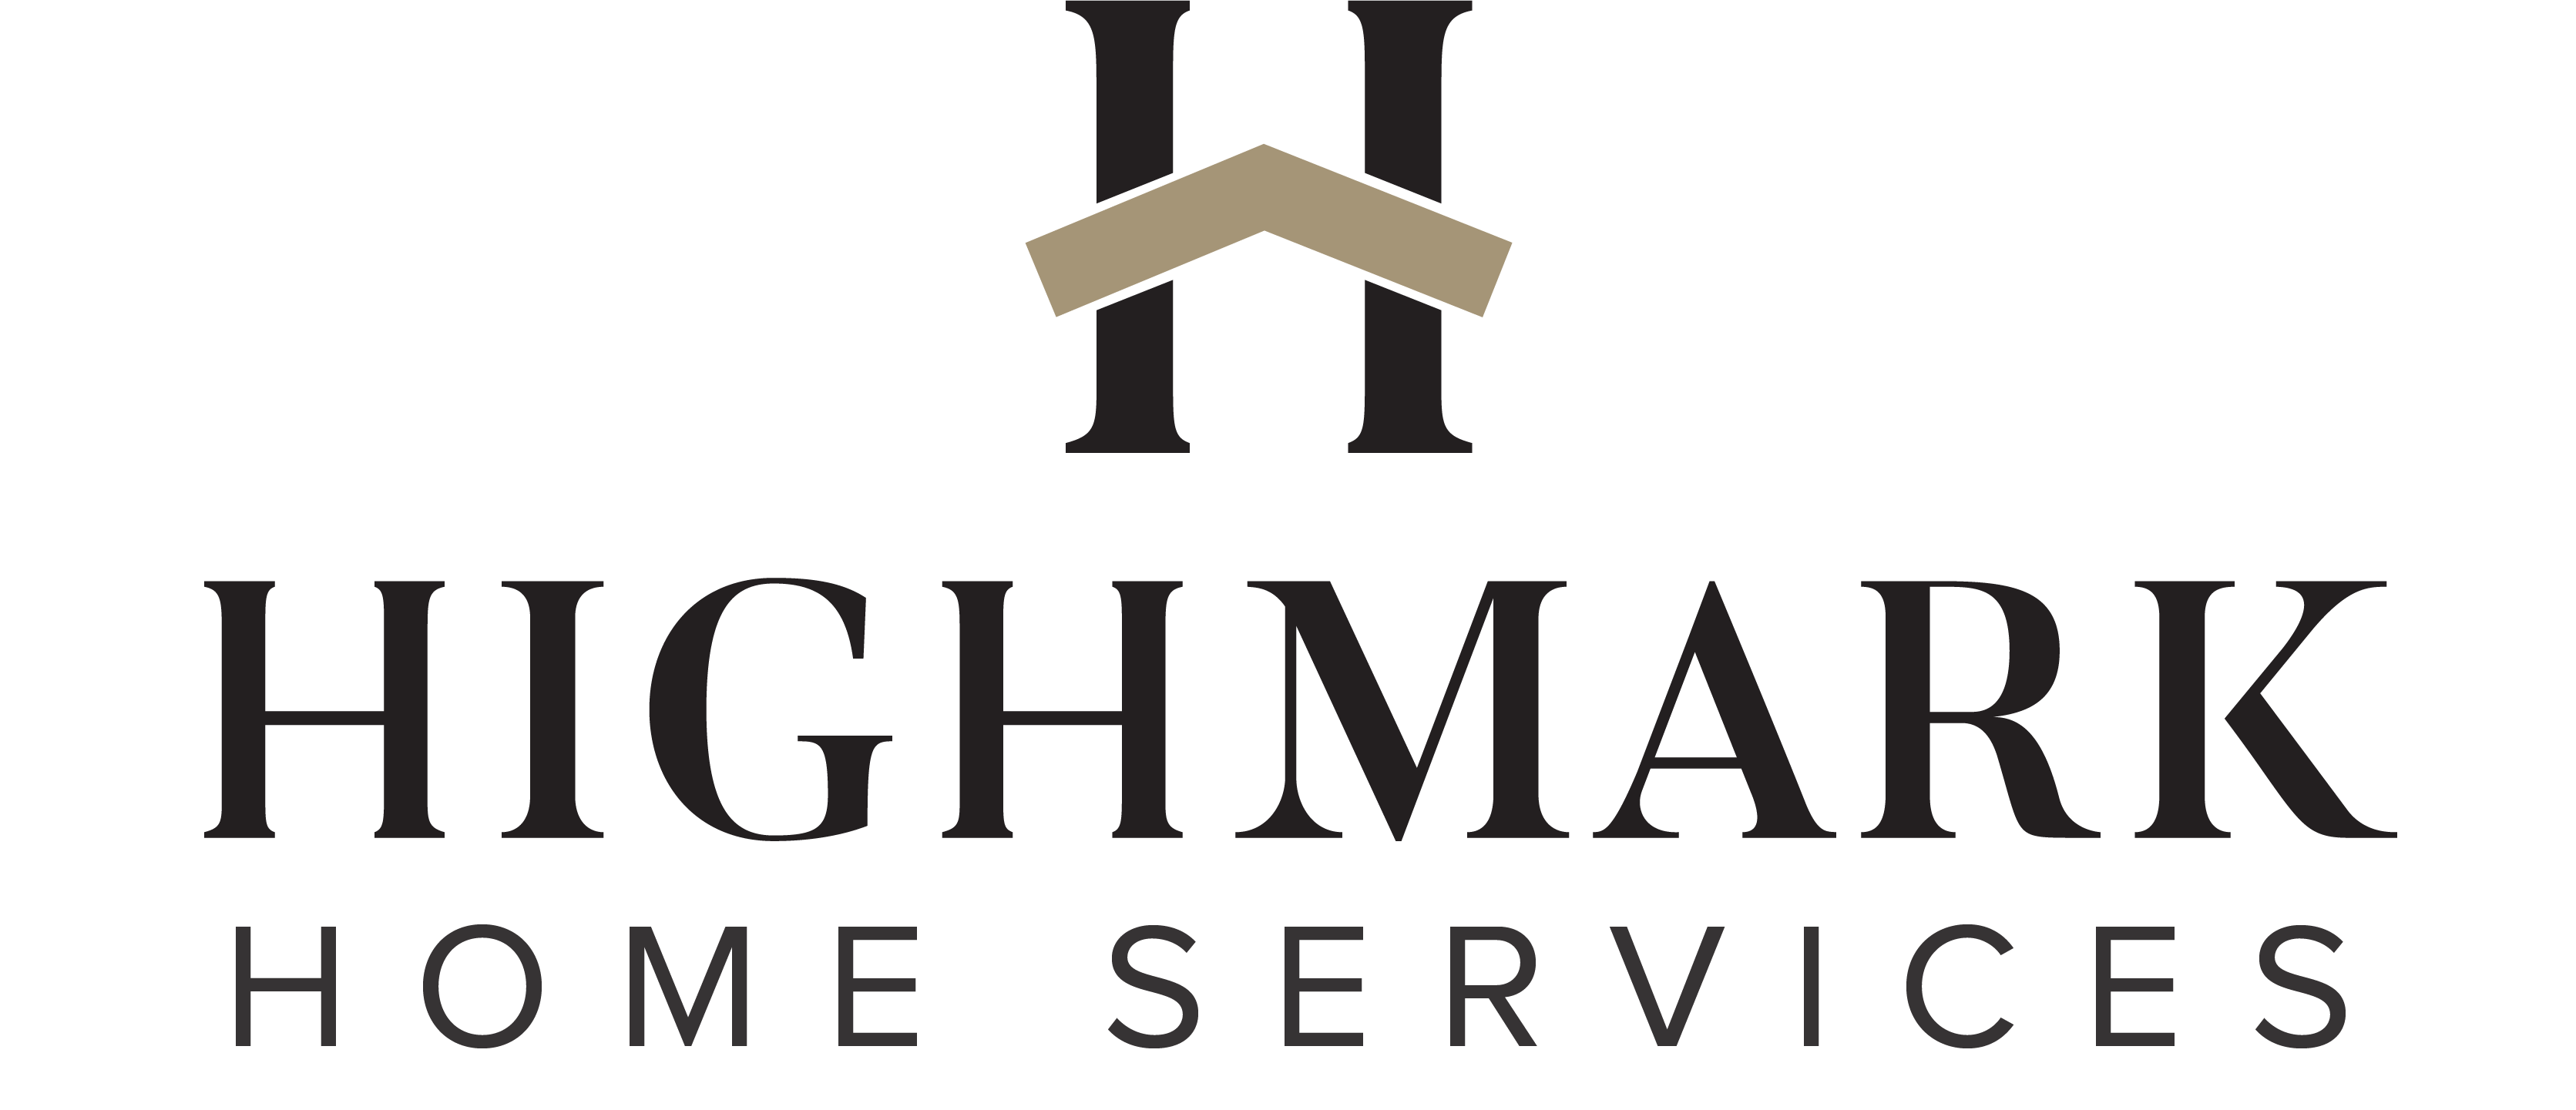 Highmark custom home services logo.